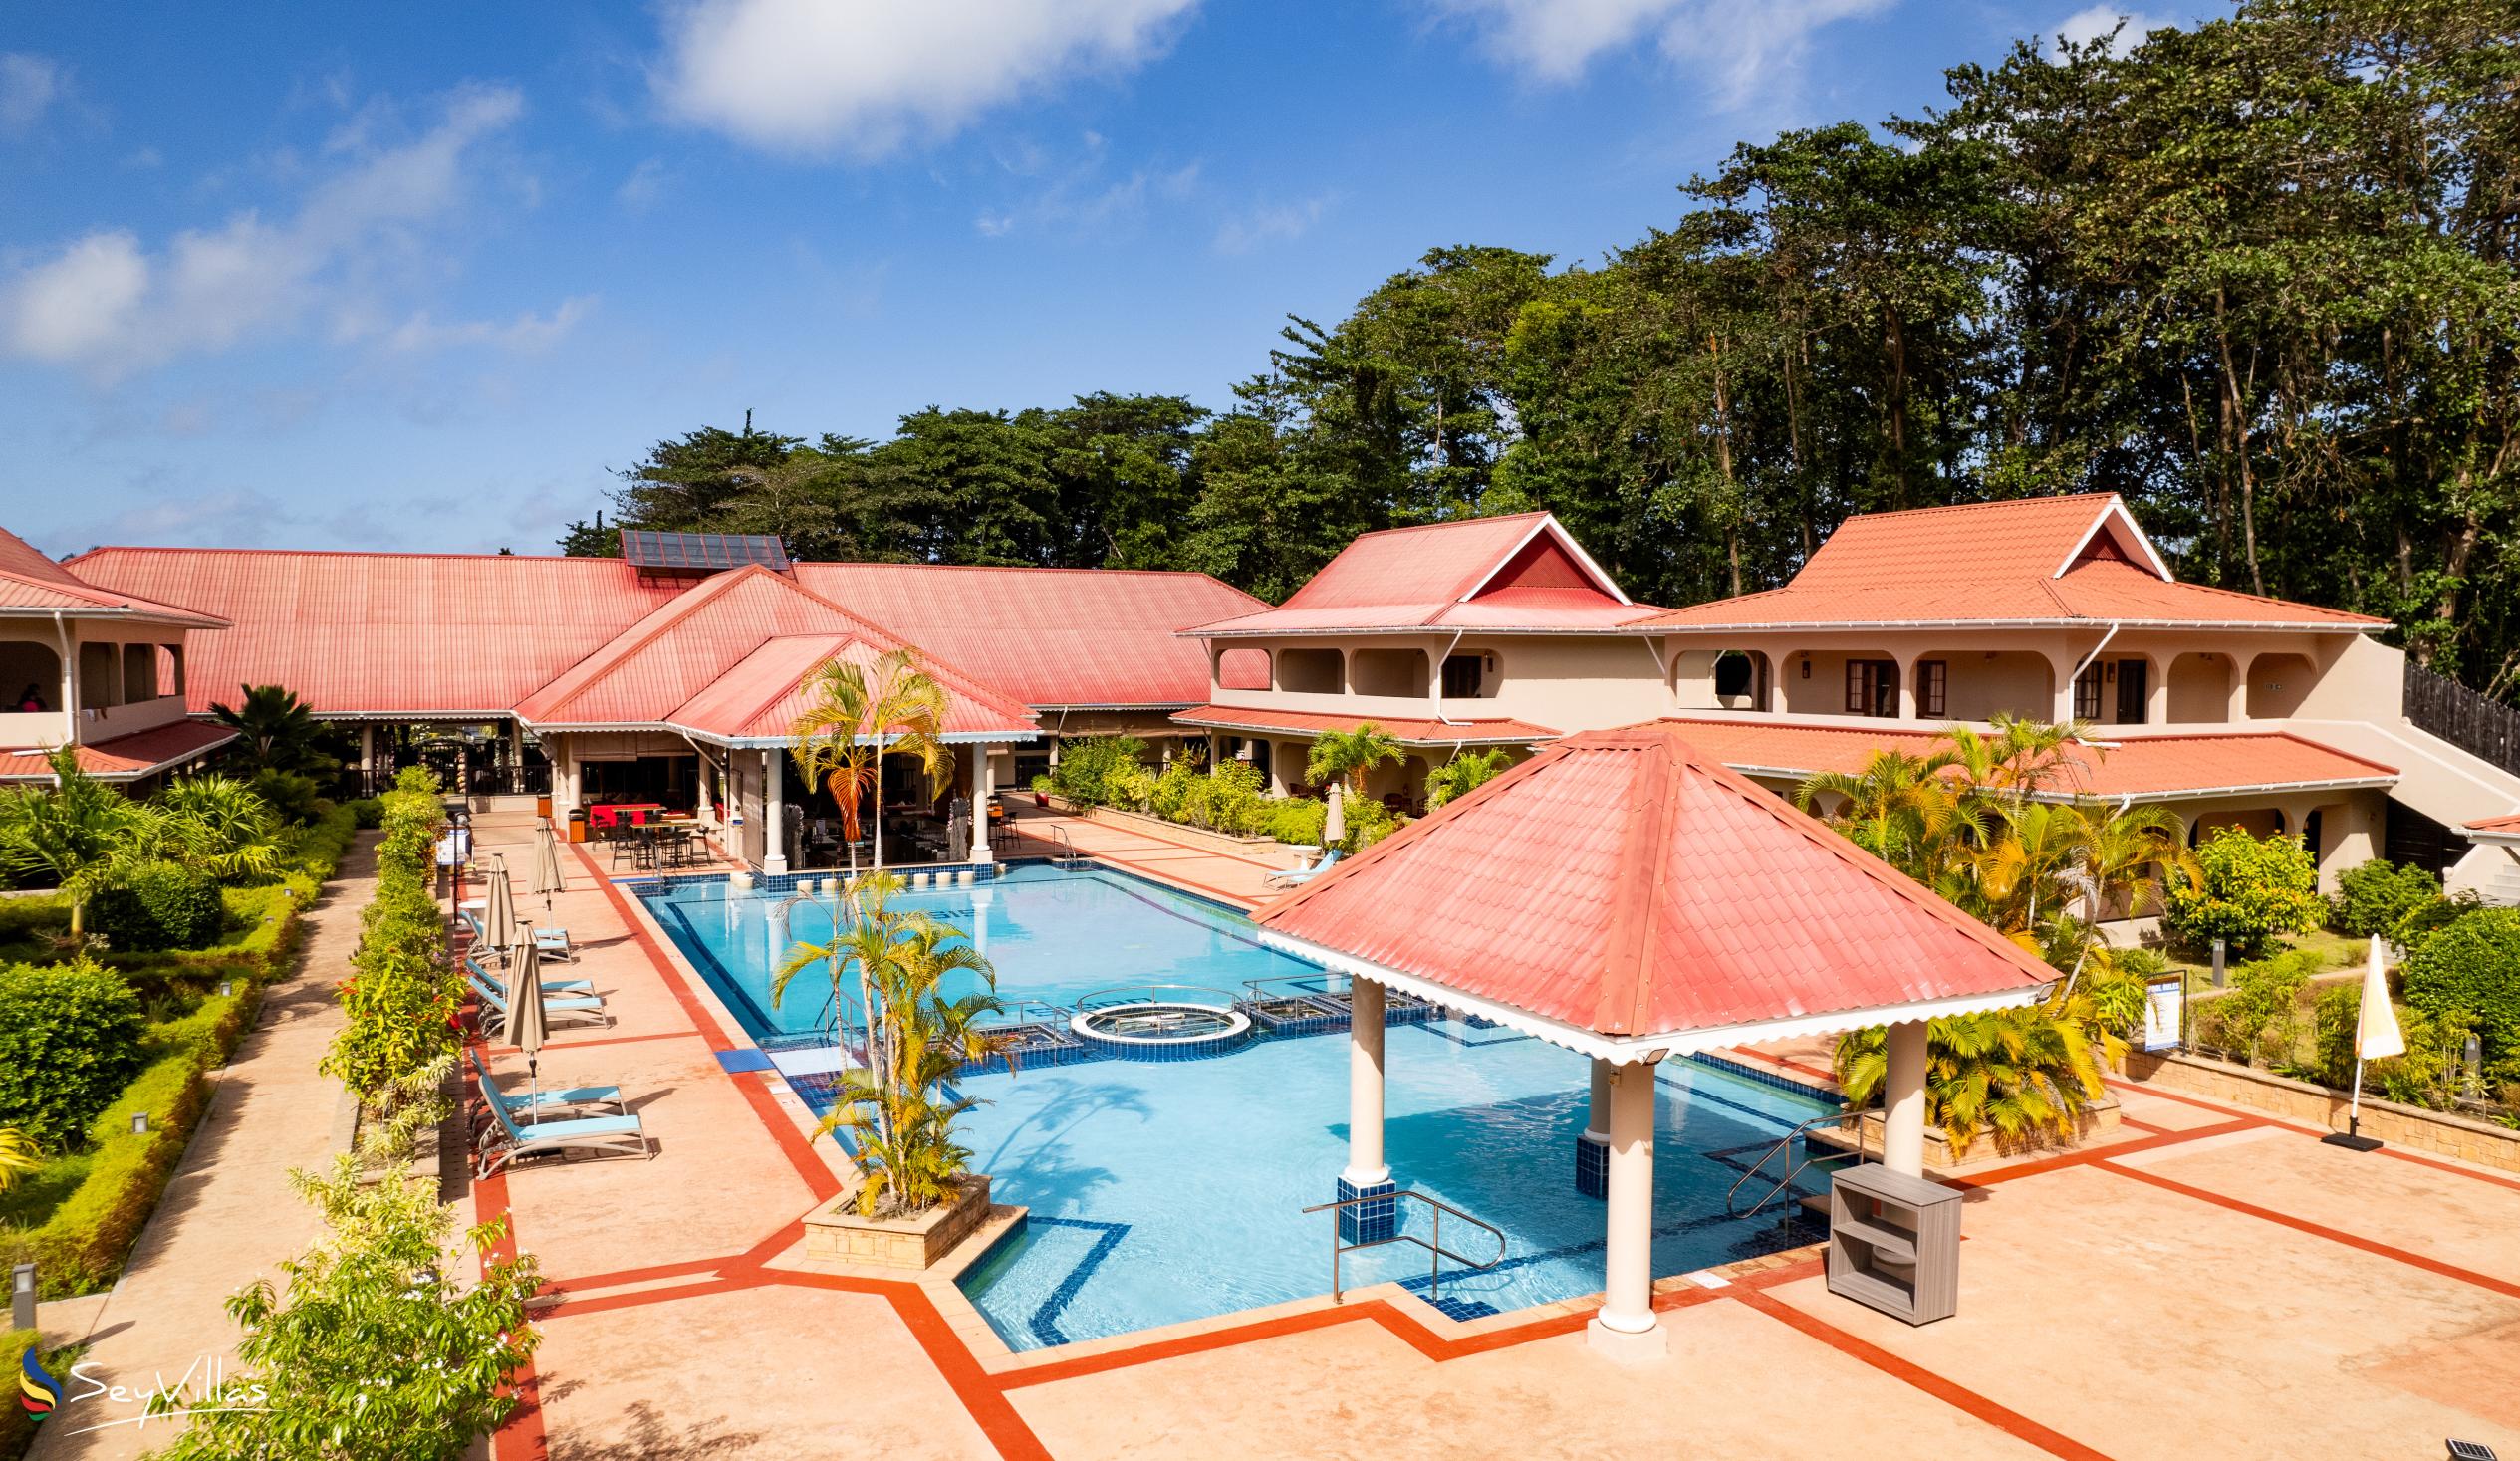 Photo 8: Oasis Hotel, Restaurant & Spa - Outdoor area - Praslin (Seychelles)